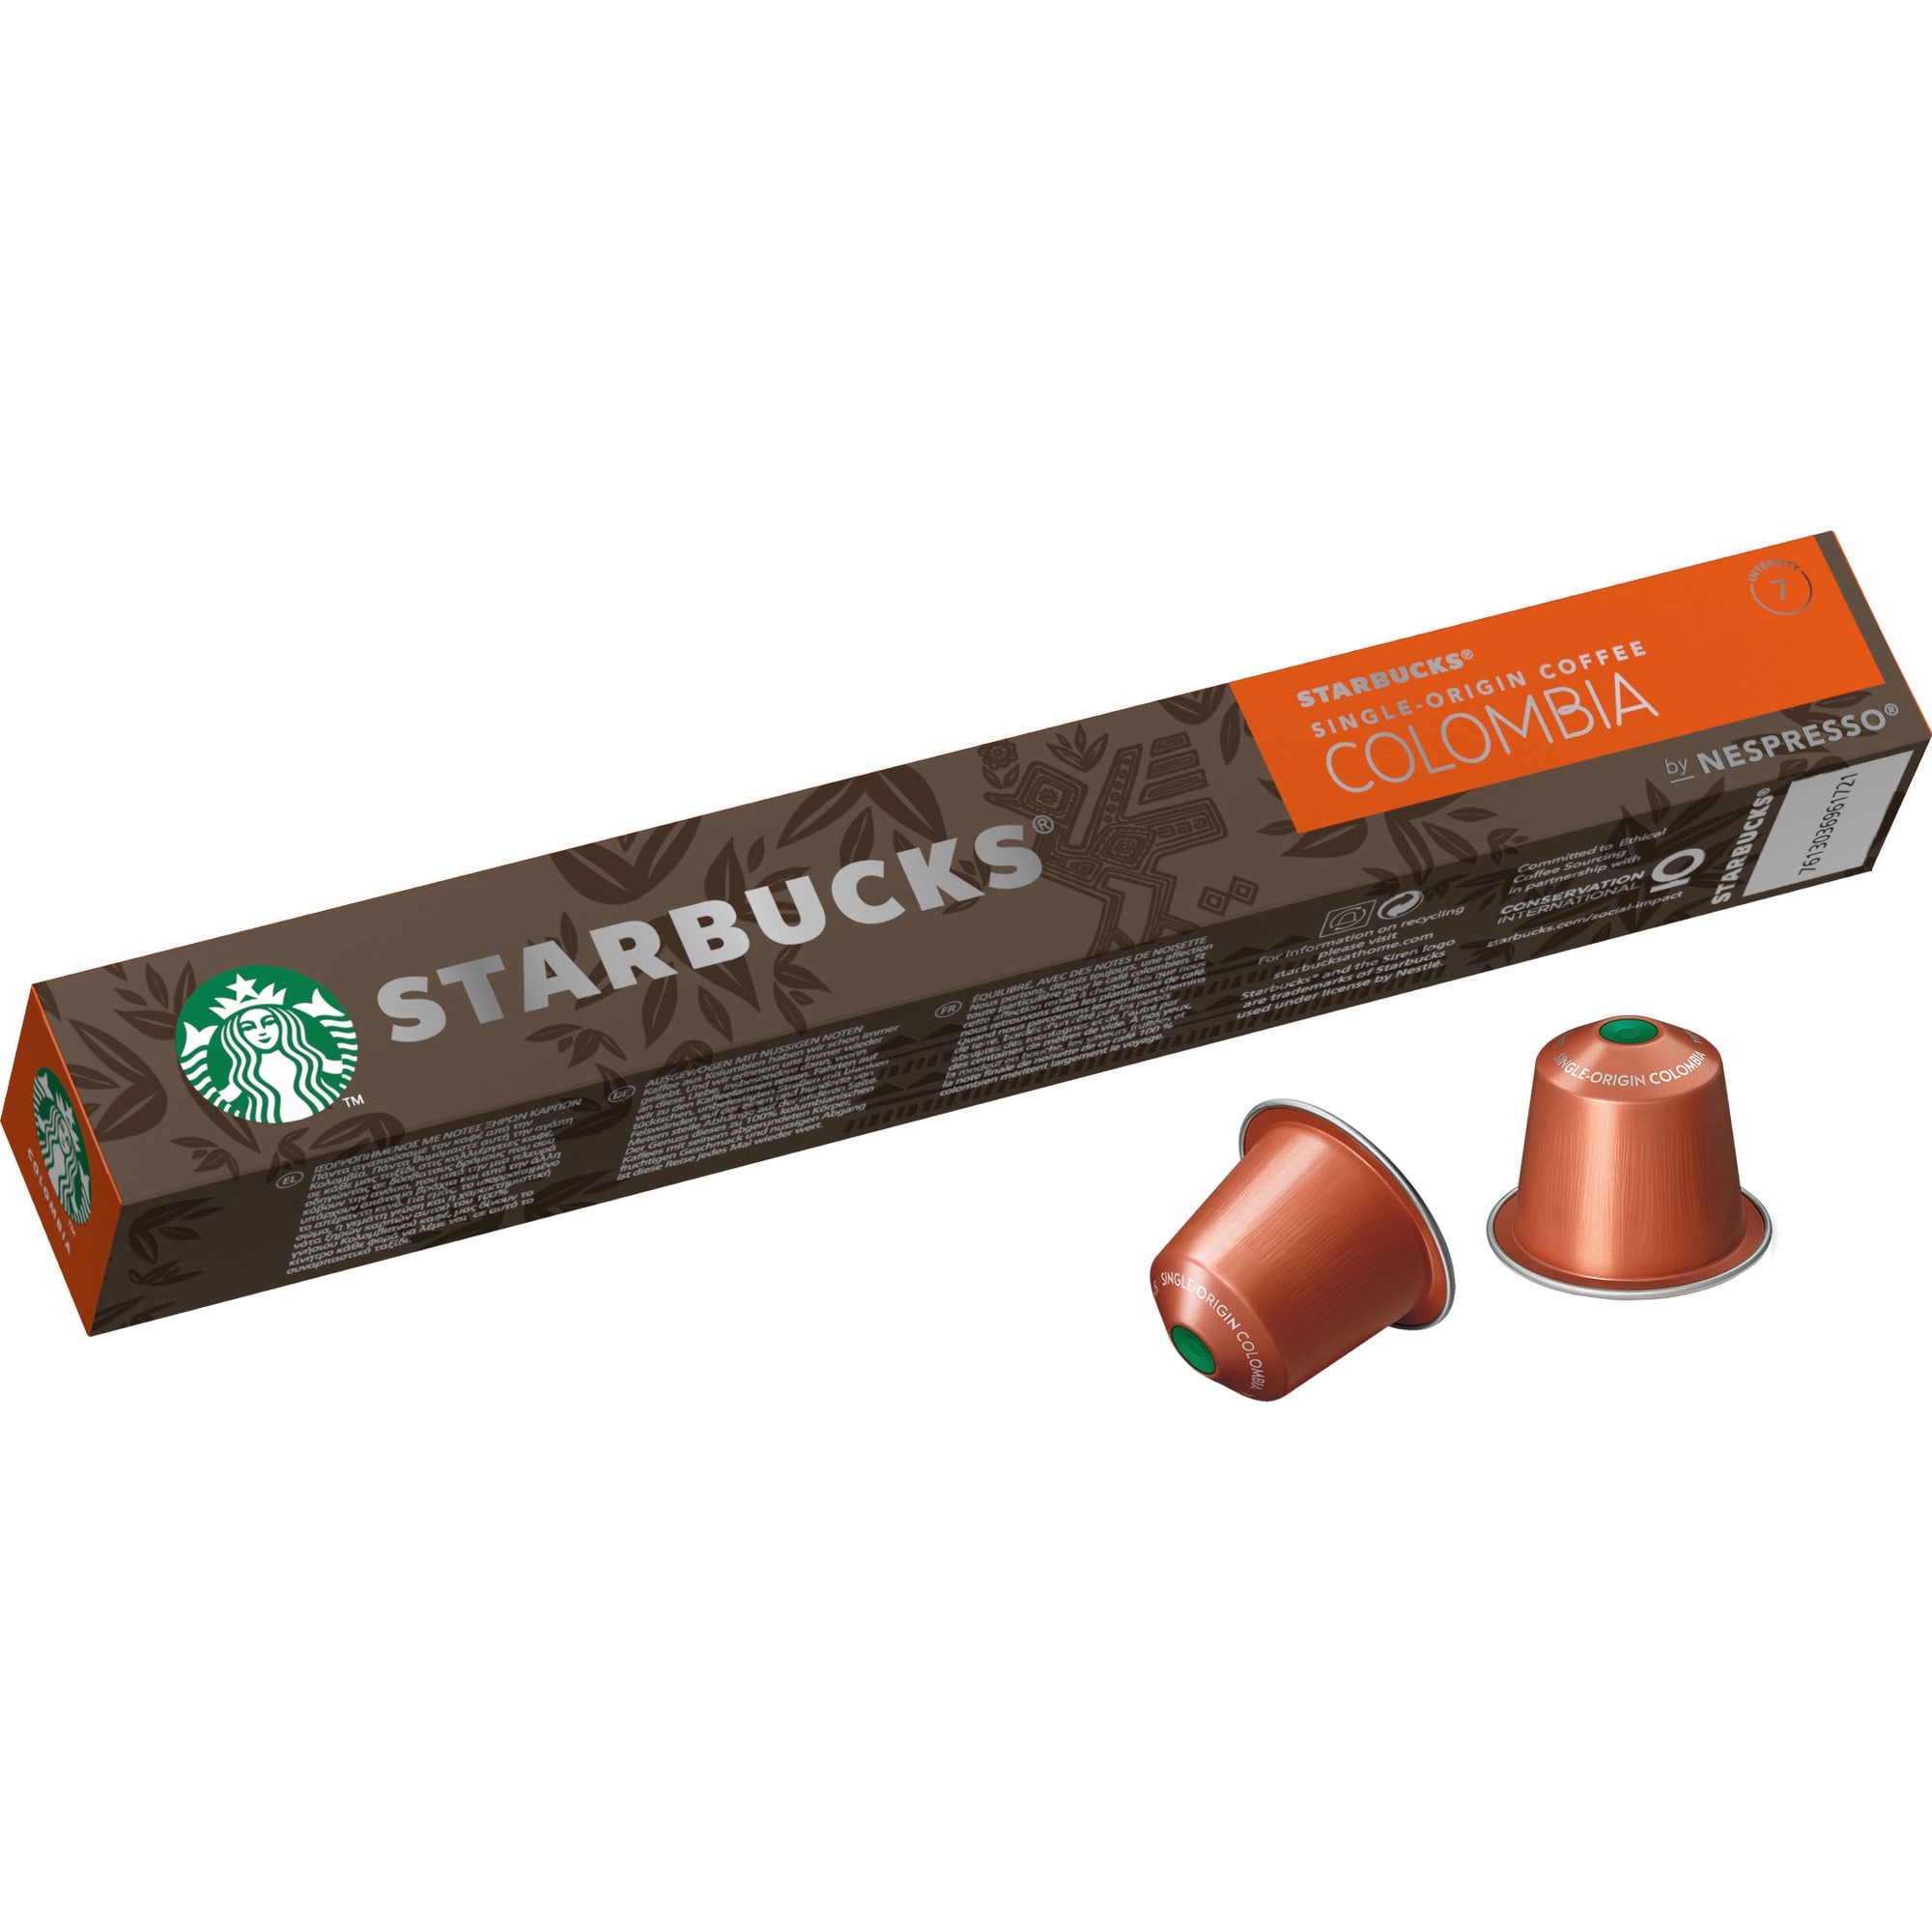 #2 - Starbucks by Nespresso Single-Origin Colombia kapsler ST12429169